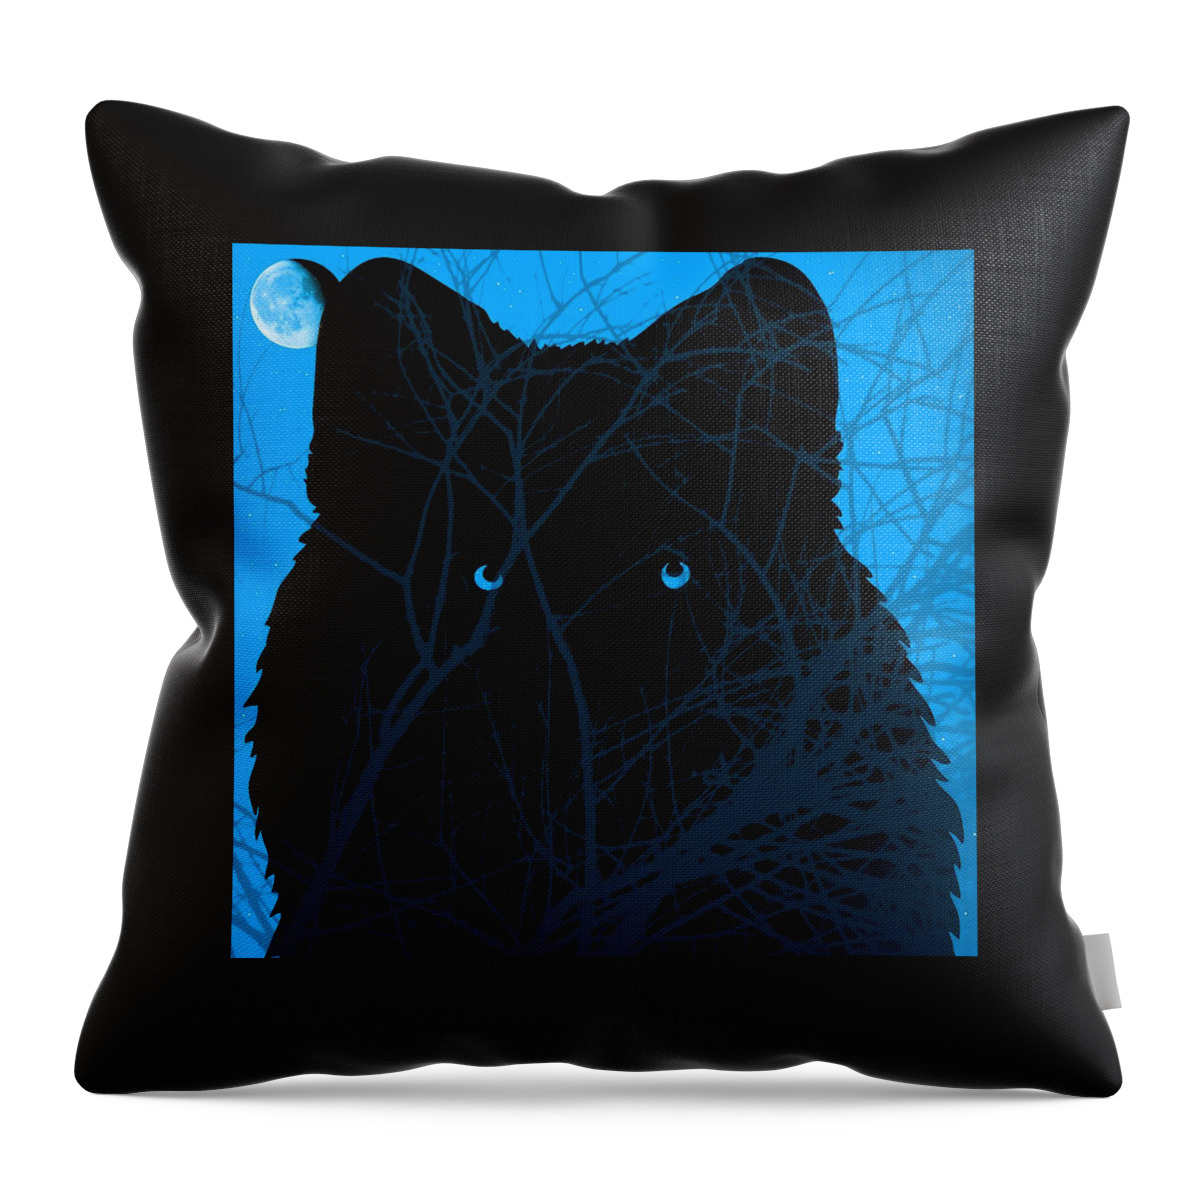 Howling Moon Throw Pillow featuring the digital art Howling Moon by Darin Baker